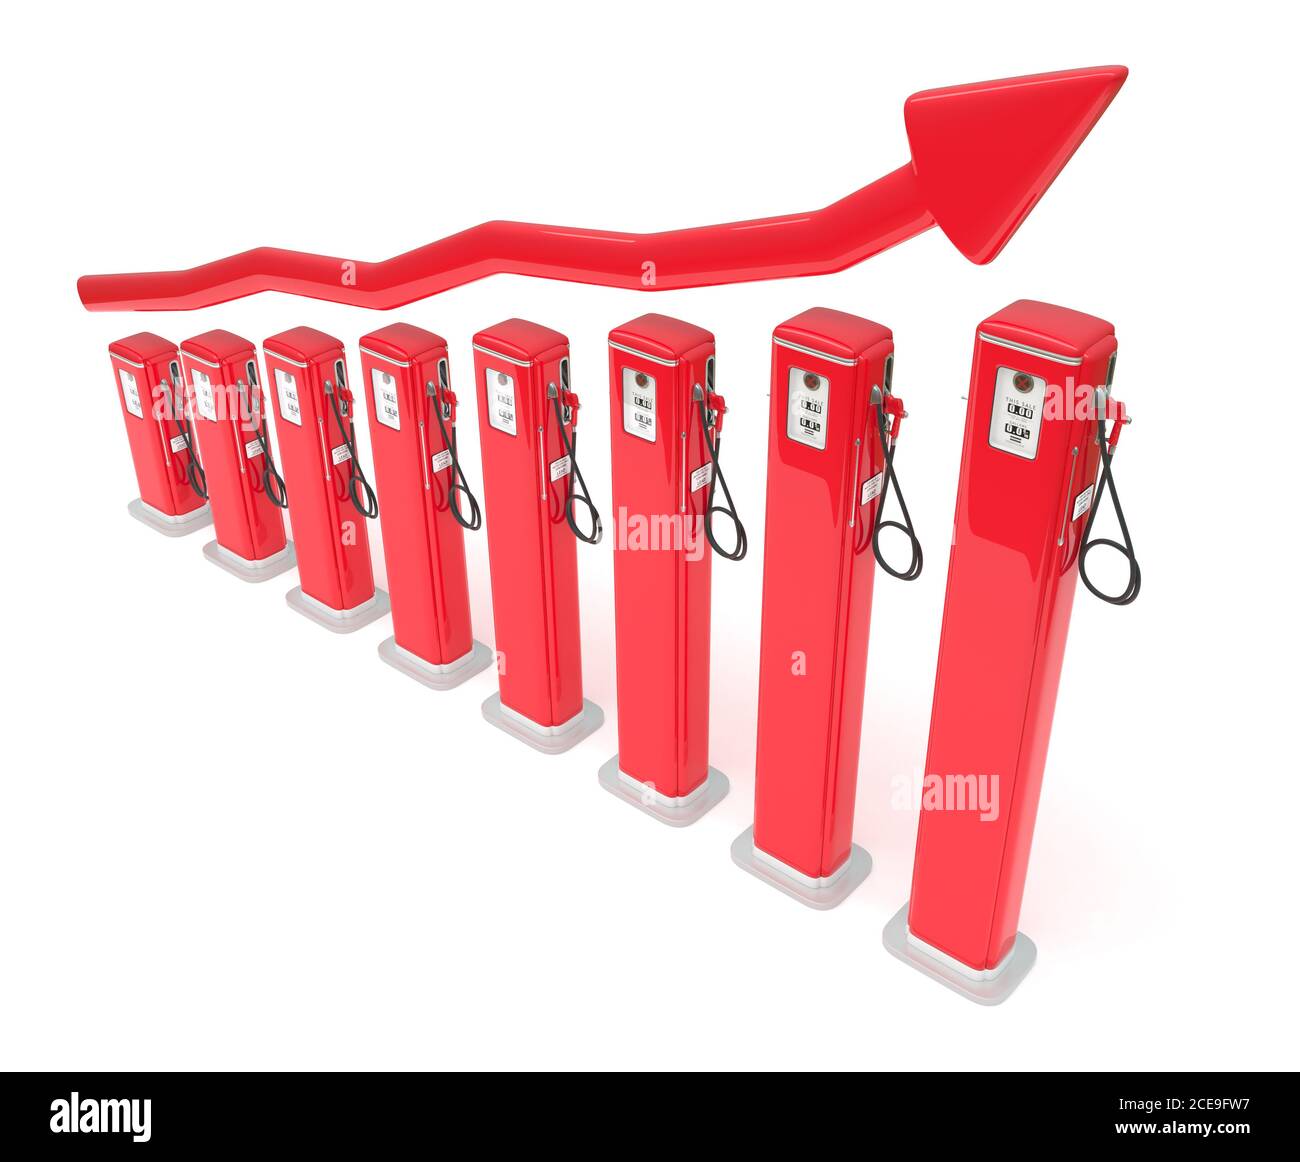 Fuel market: red petrol pumps chart Stock Photo